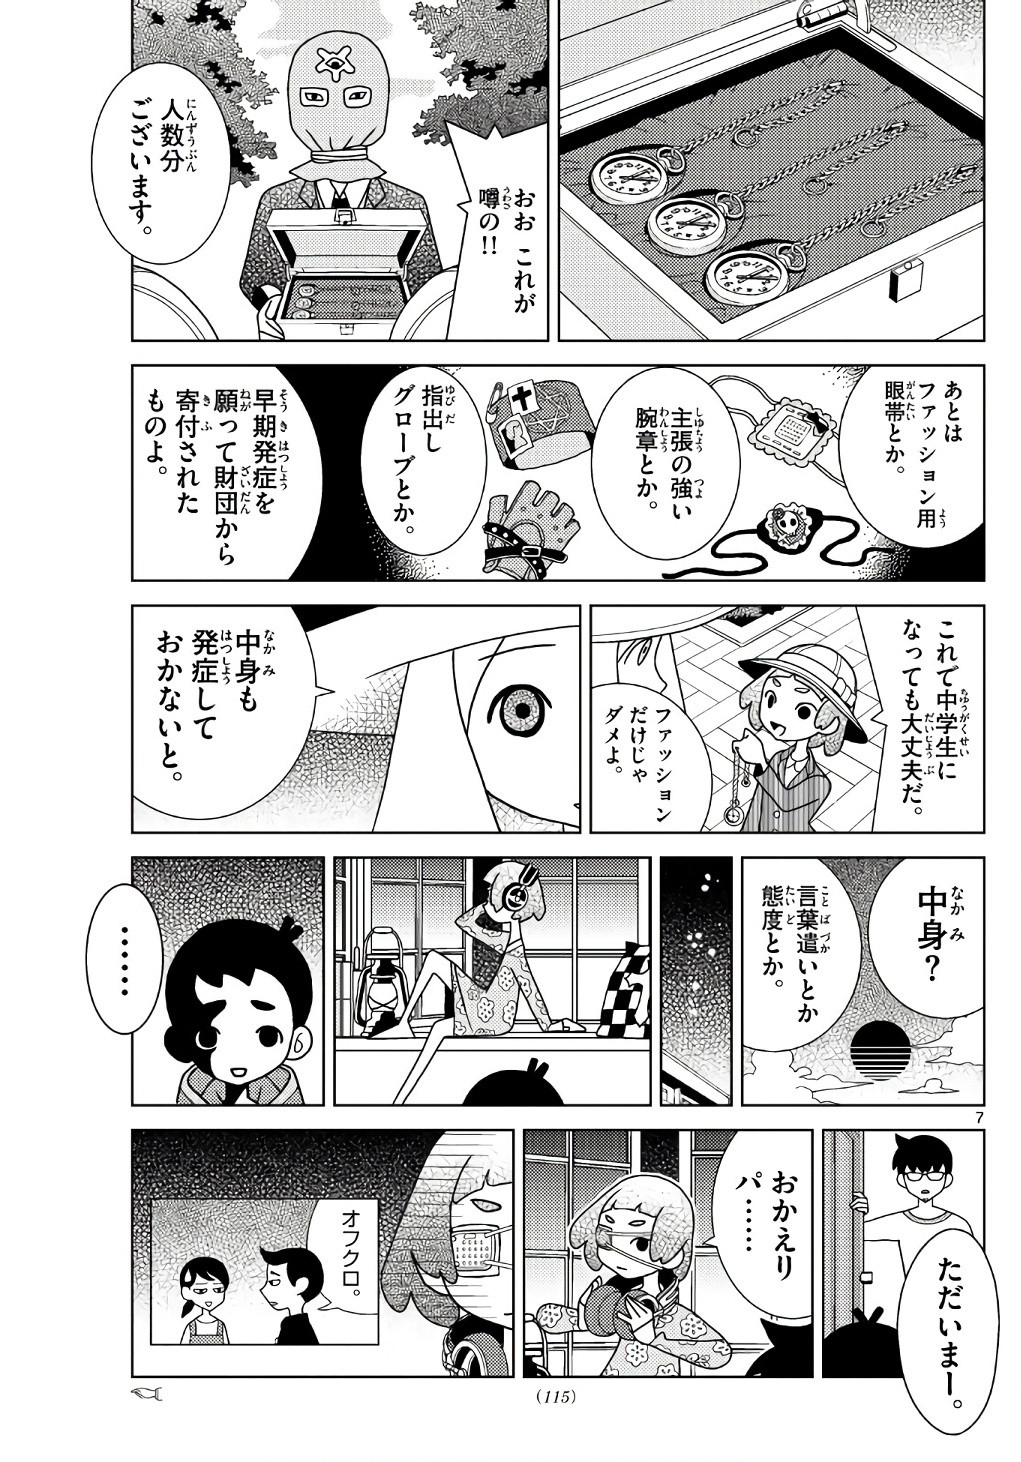 Shibuya Near Family - Chapter 089 - Page 7